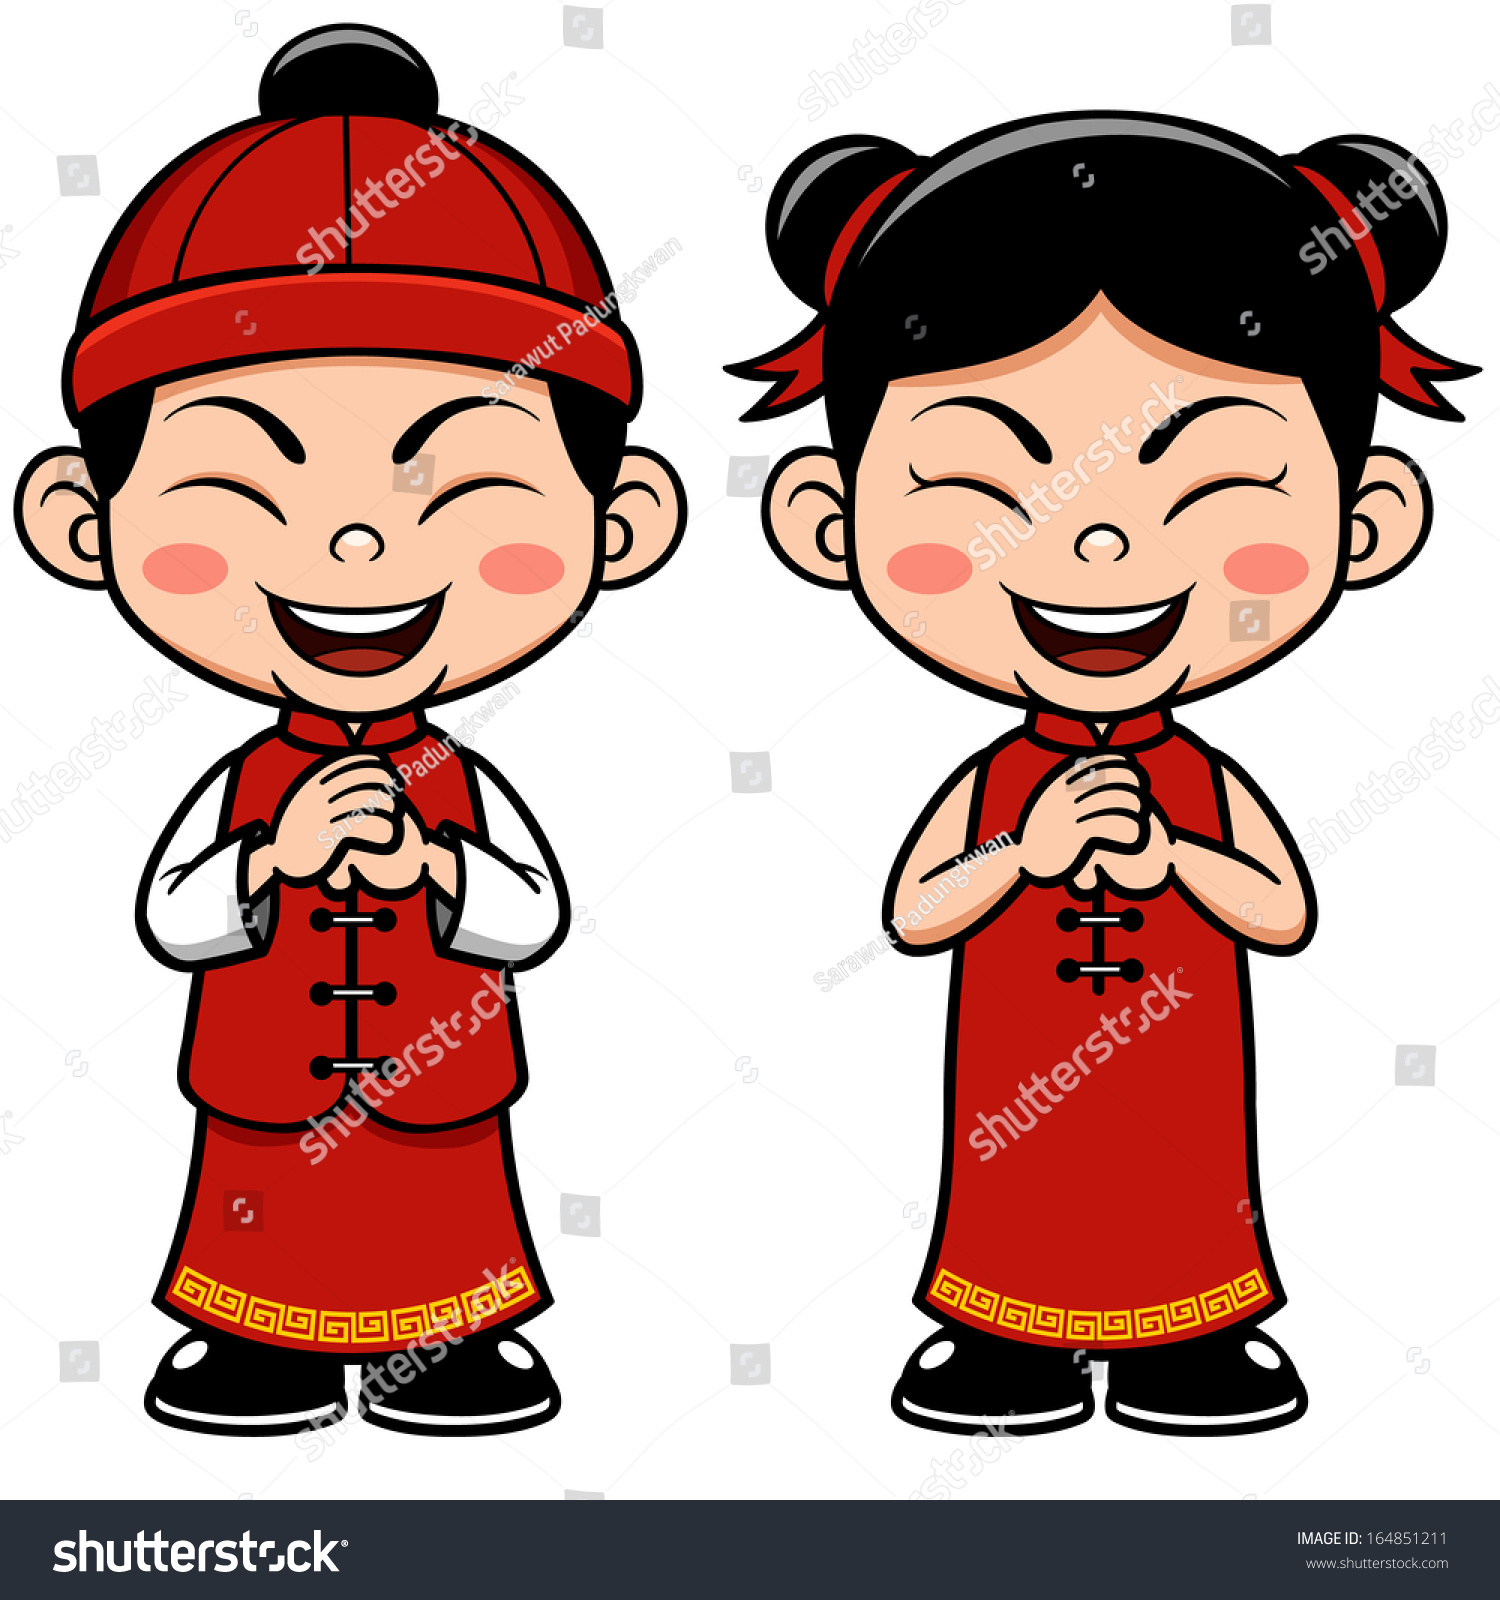 Vector Illustration Chinese Kids Stock Vector 164851211 - Shutterstock